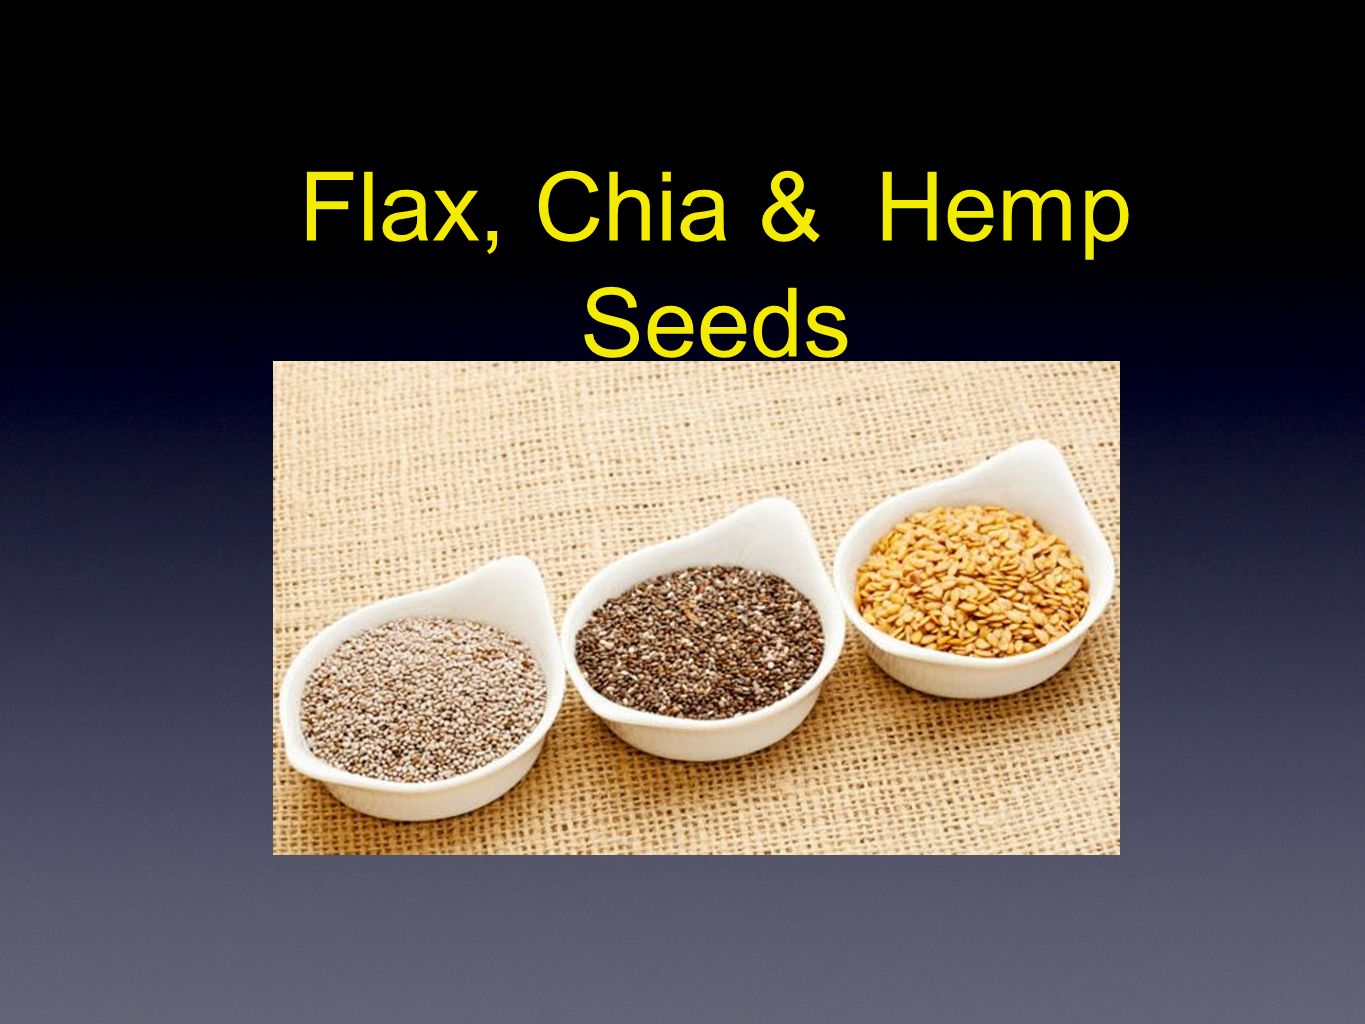 Flax, Chia & Hemp Seeds